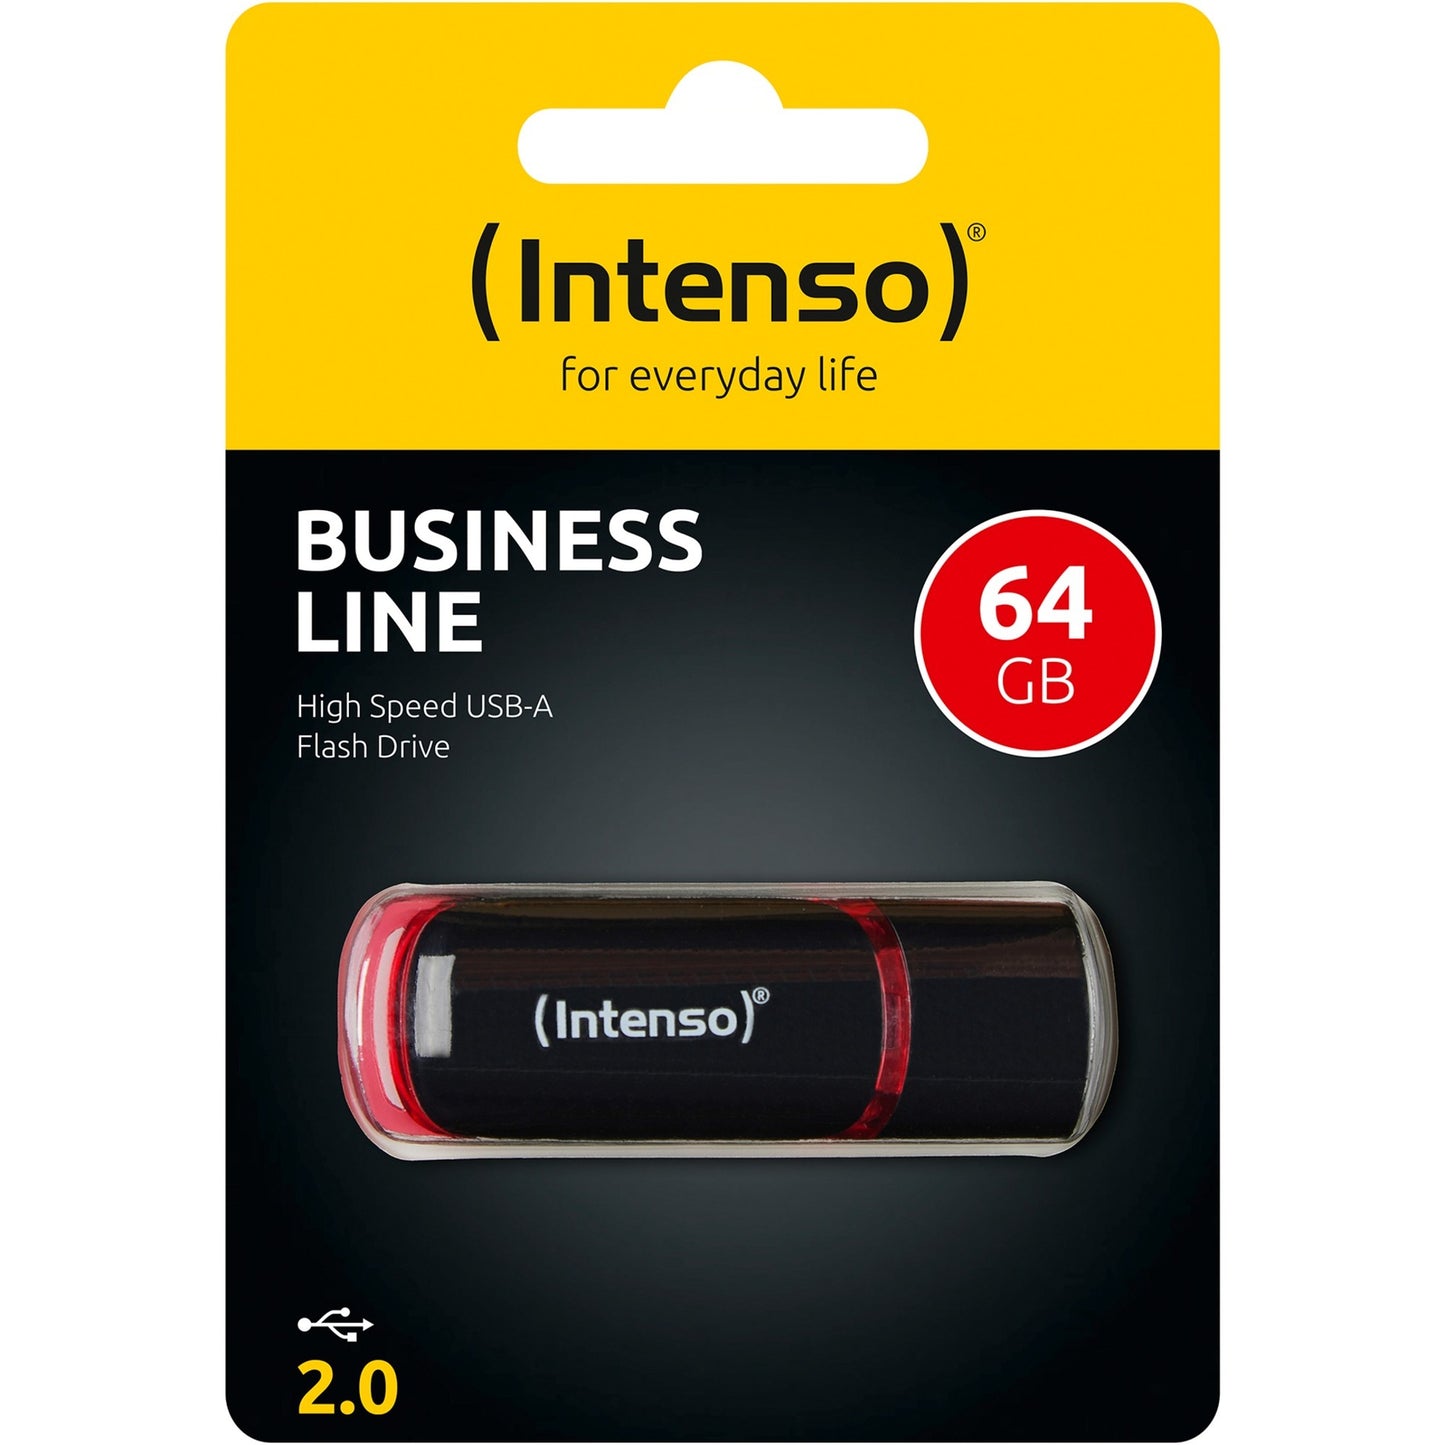 Intenso Business Line 64 GB USB 2.0